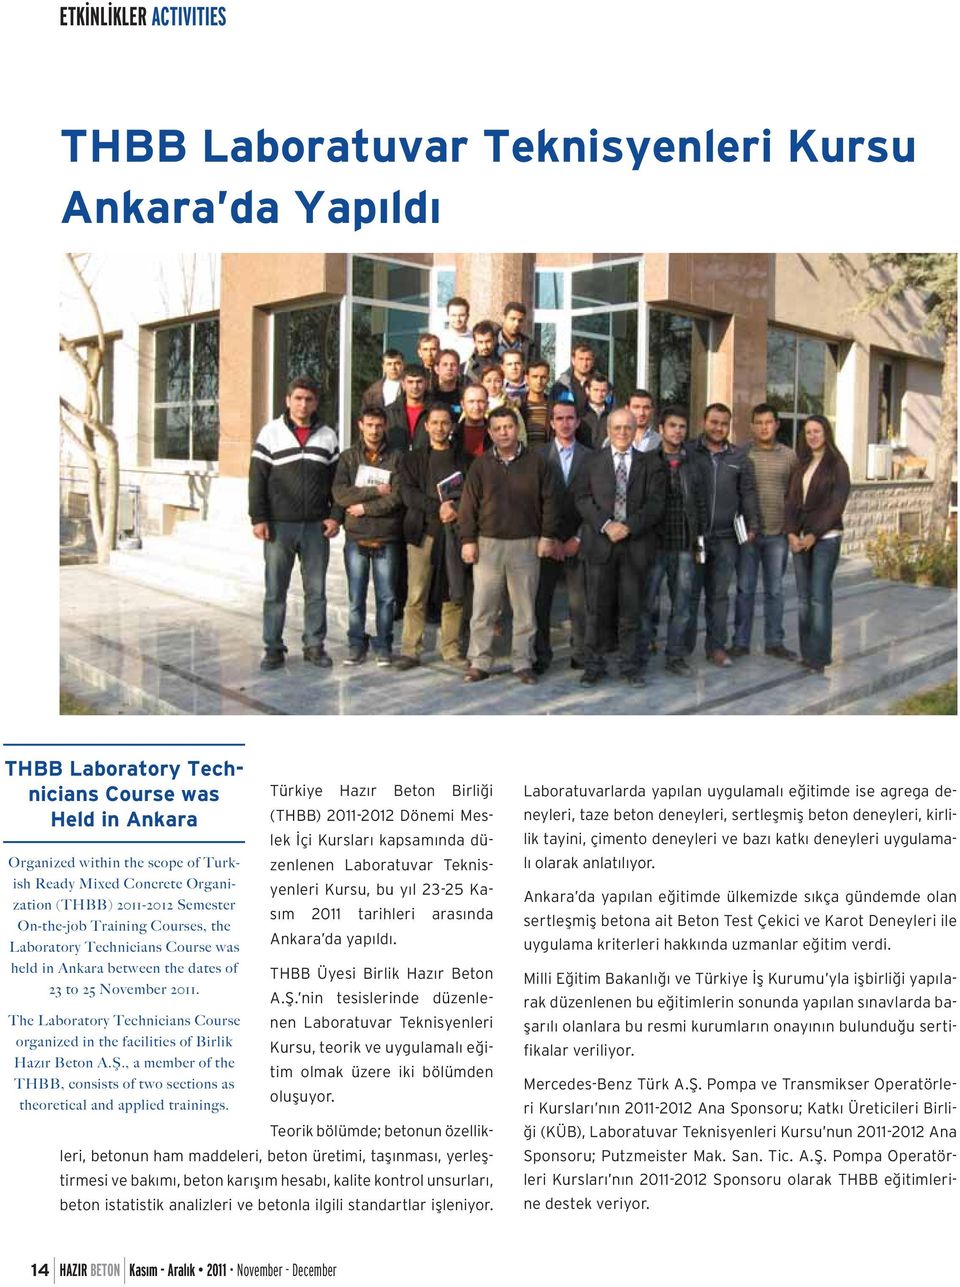 arasında On-the-job Training Courses, the Ankara da yapıldı. Laboratory Technicians Course was held in Ankara between the dates of 23 to 25 November 2011.